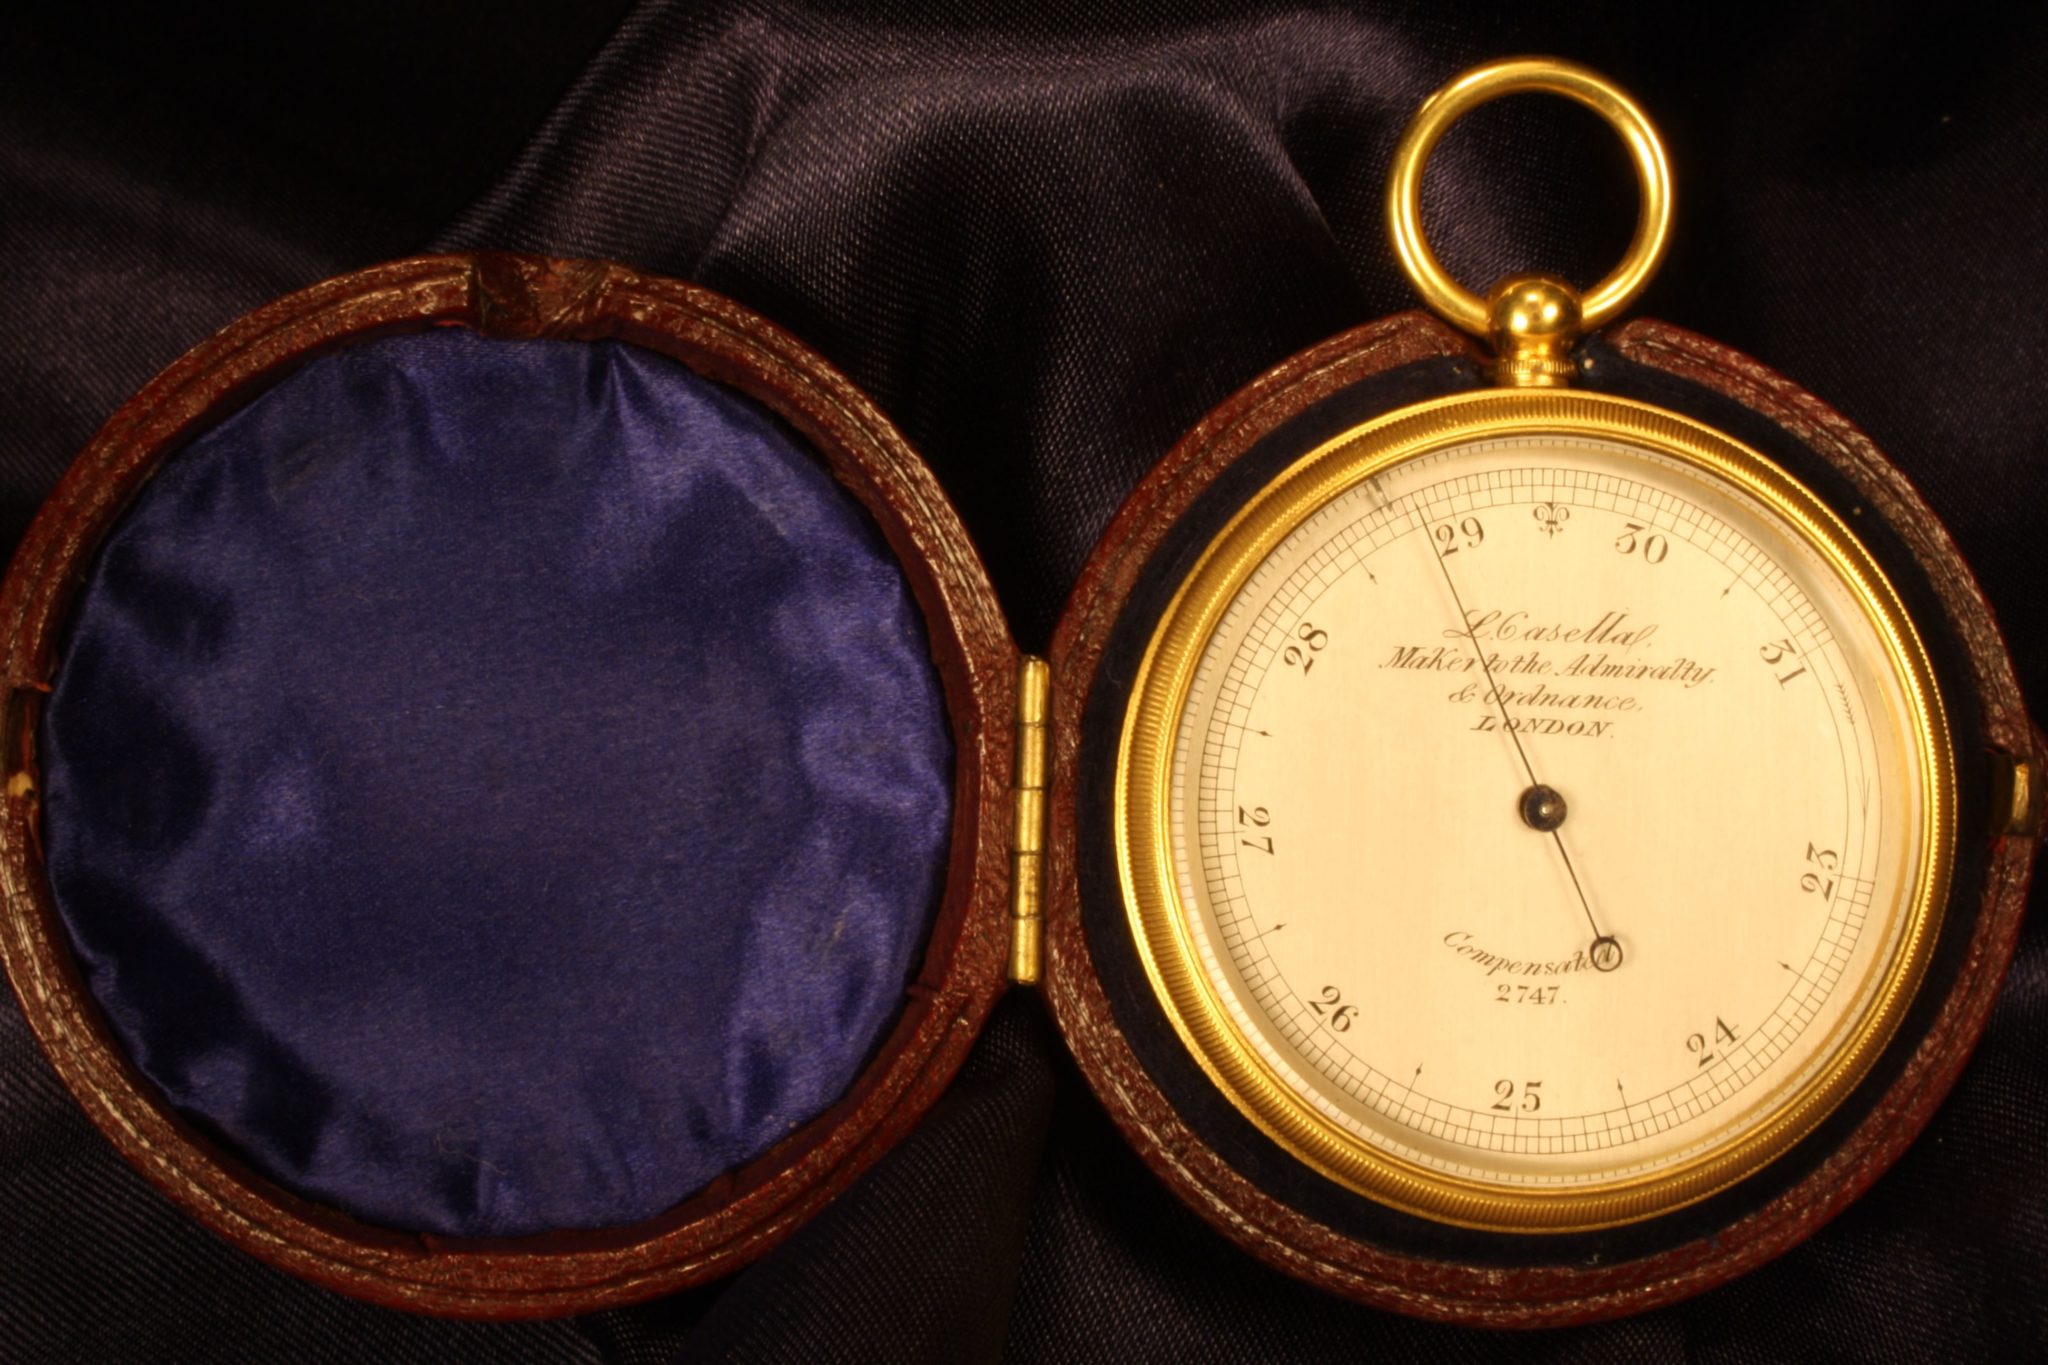 Image of Casella Pocket Barometer No 2747